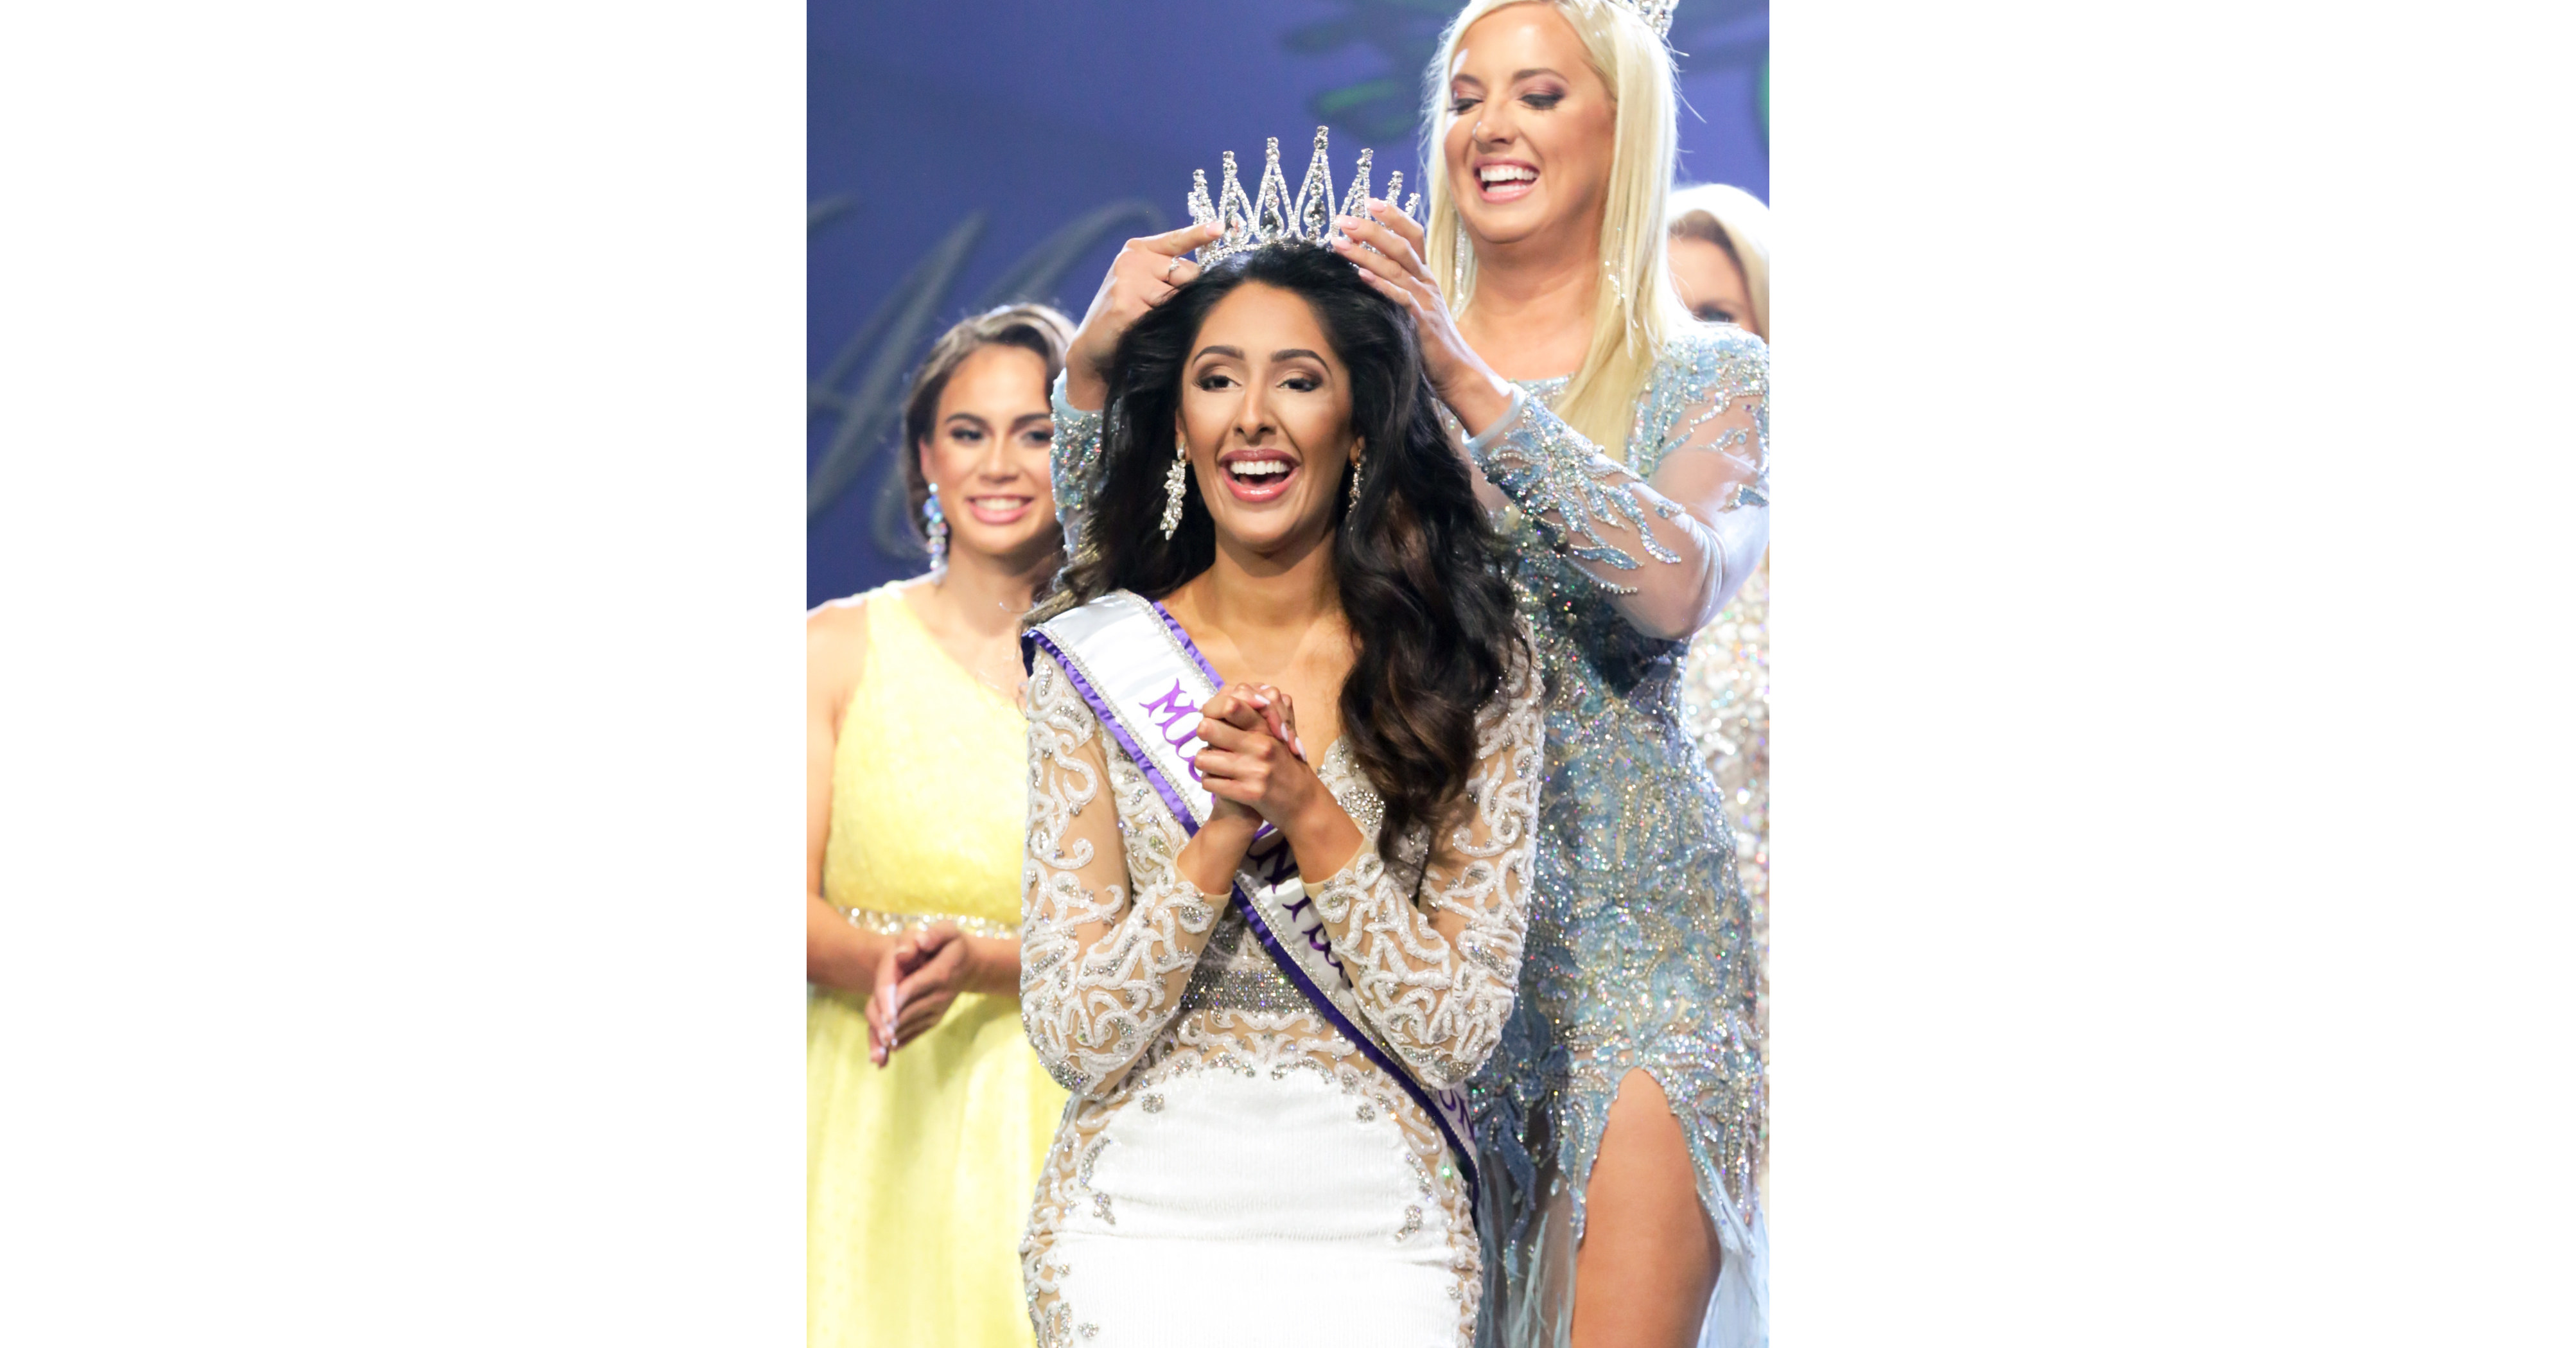 Miss Illinois International, Deepa Dhillon, Crowned Miss International 2021 - PRNewswire